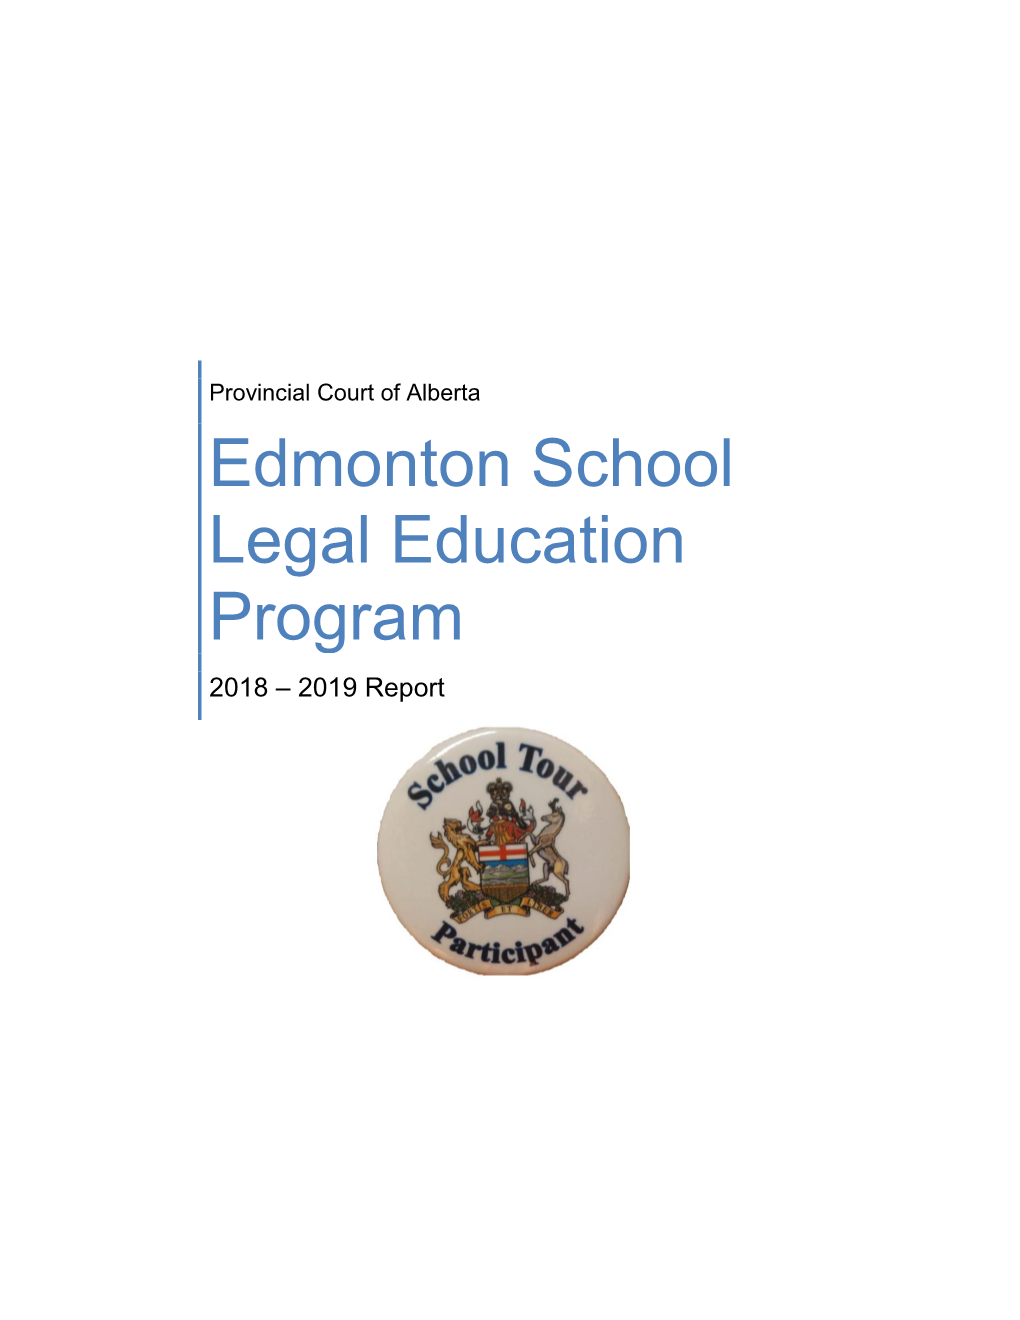 Edmonton School Legal Education Program 2018-19 Report